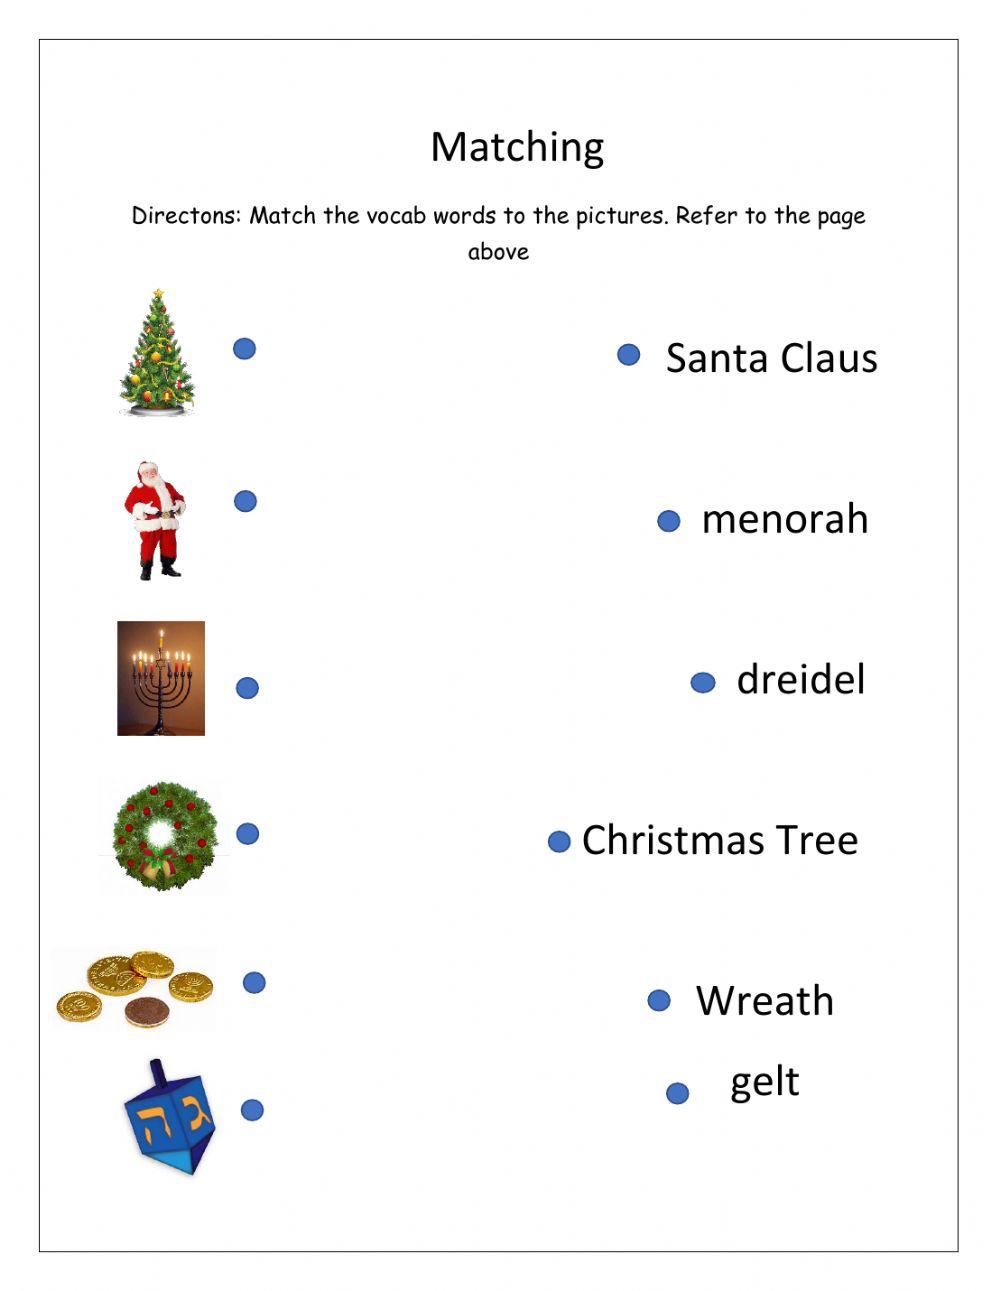 Christmas hanukkah tree map and mathcing